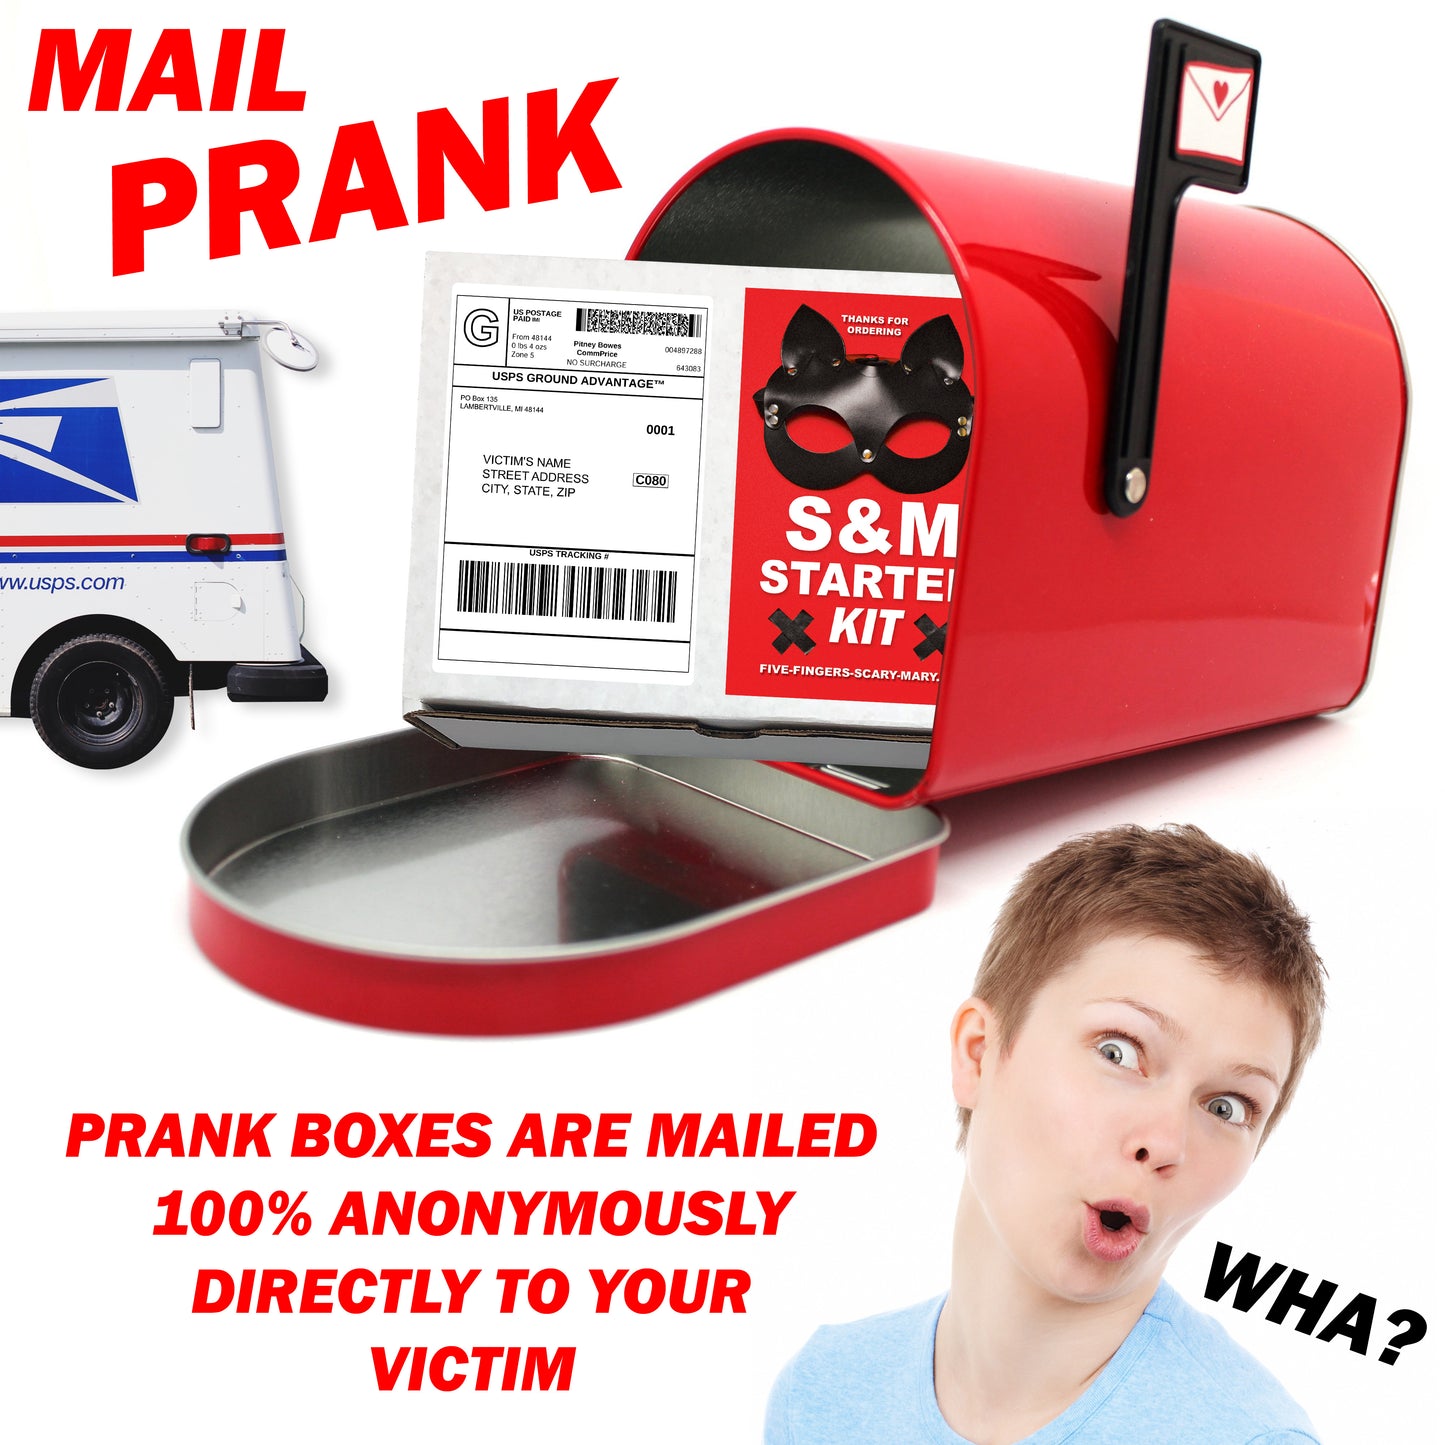 S&M Starter Kit Joke Mail